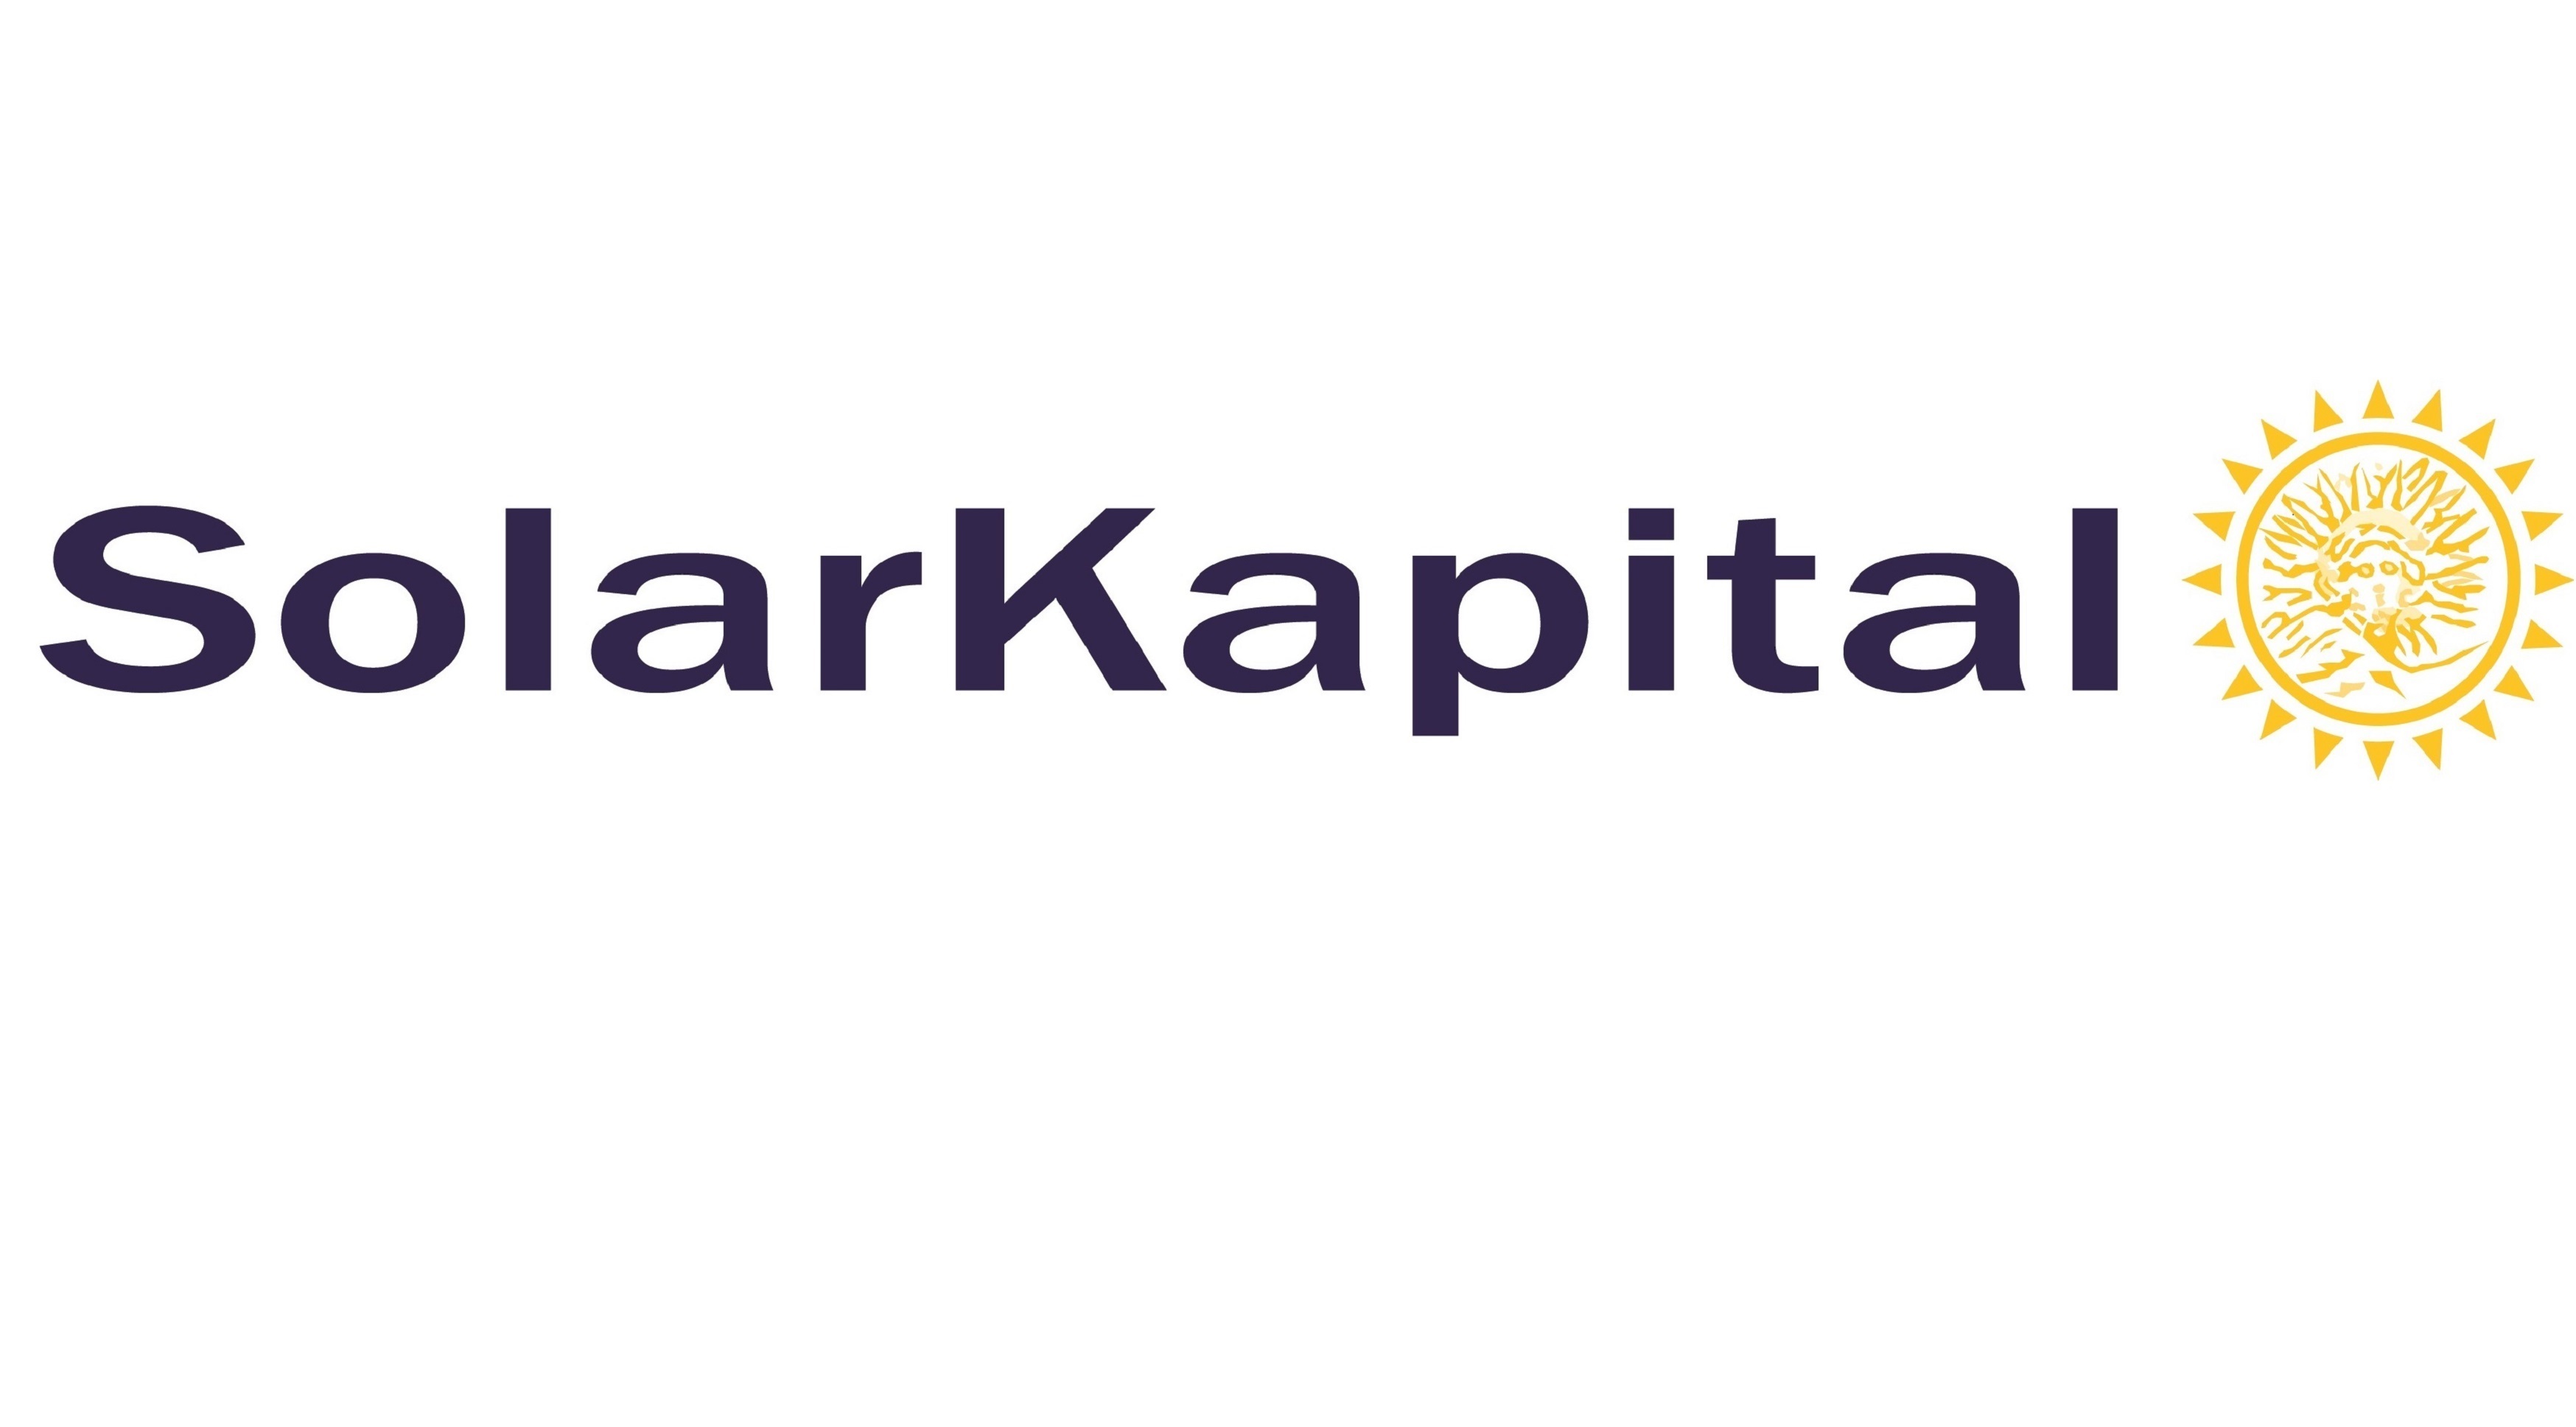 15.03.2016 - SolarKapital team keeps growing